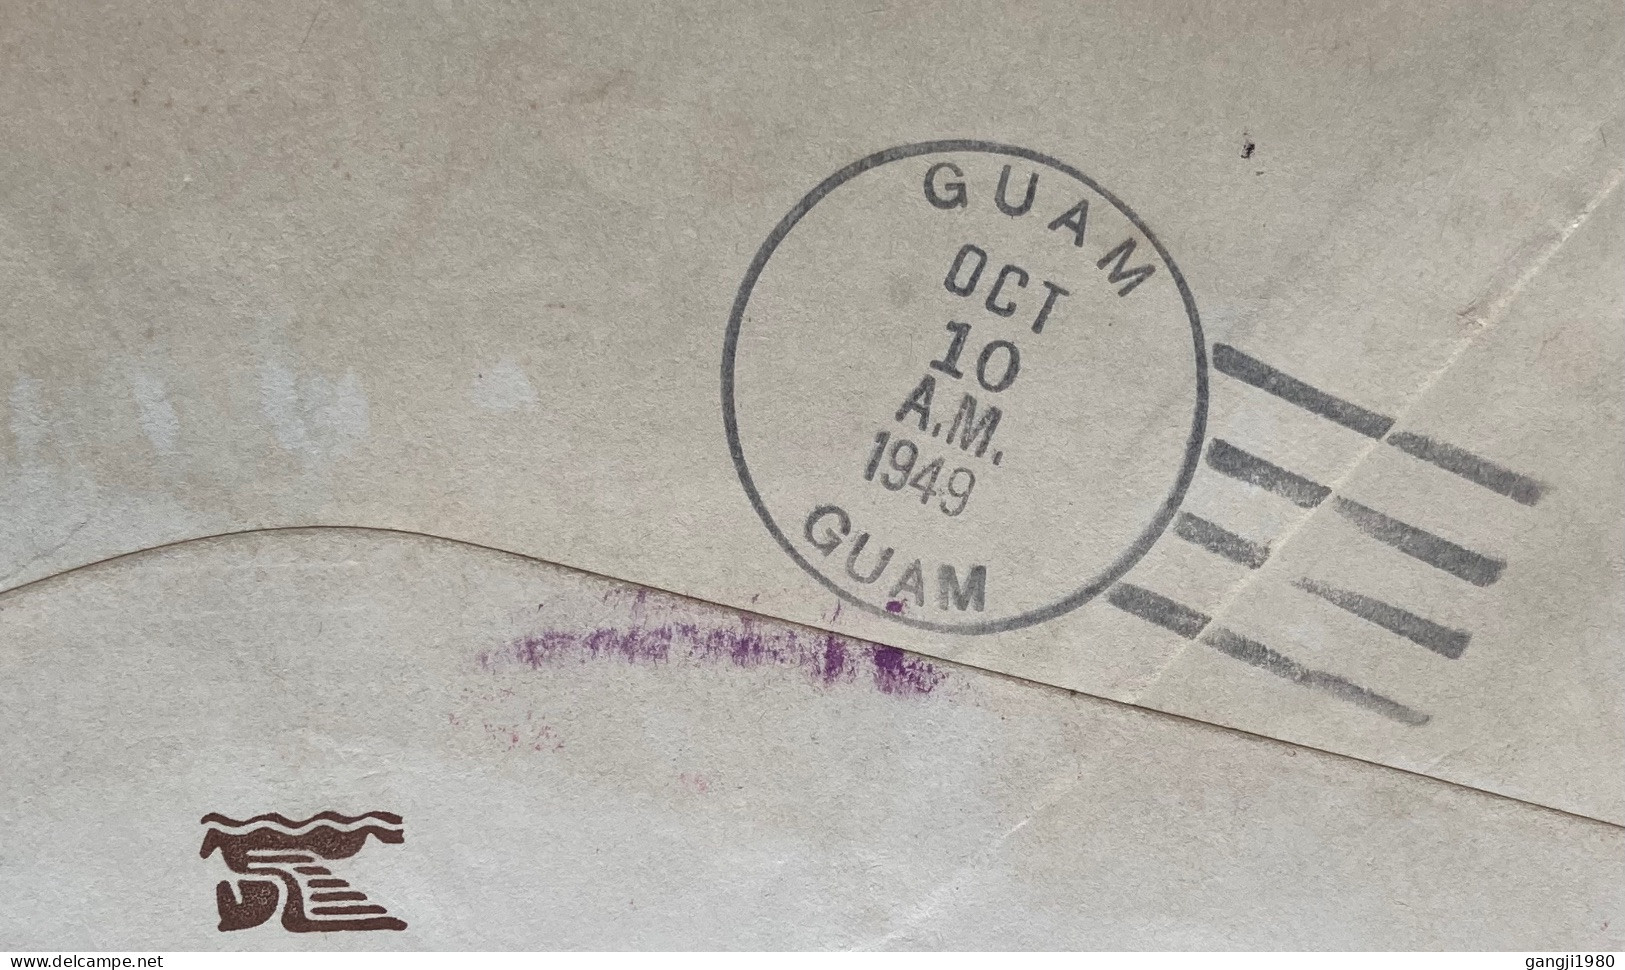 CUBA -GUAM 1949, COVER USED TO  USA VIA GUAM, FORWARED, JOURNAL READER DIGEST, METER MACHINE, BUY CUBAN SUGAR, HAVANA CI - Lettres & Documents